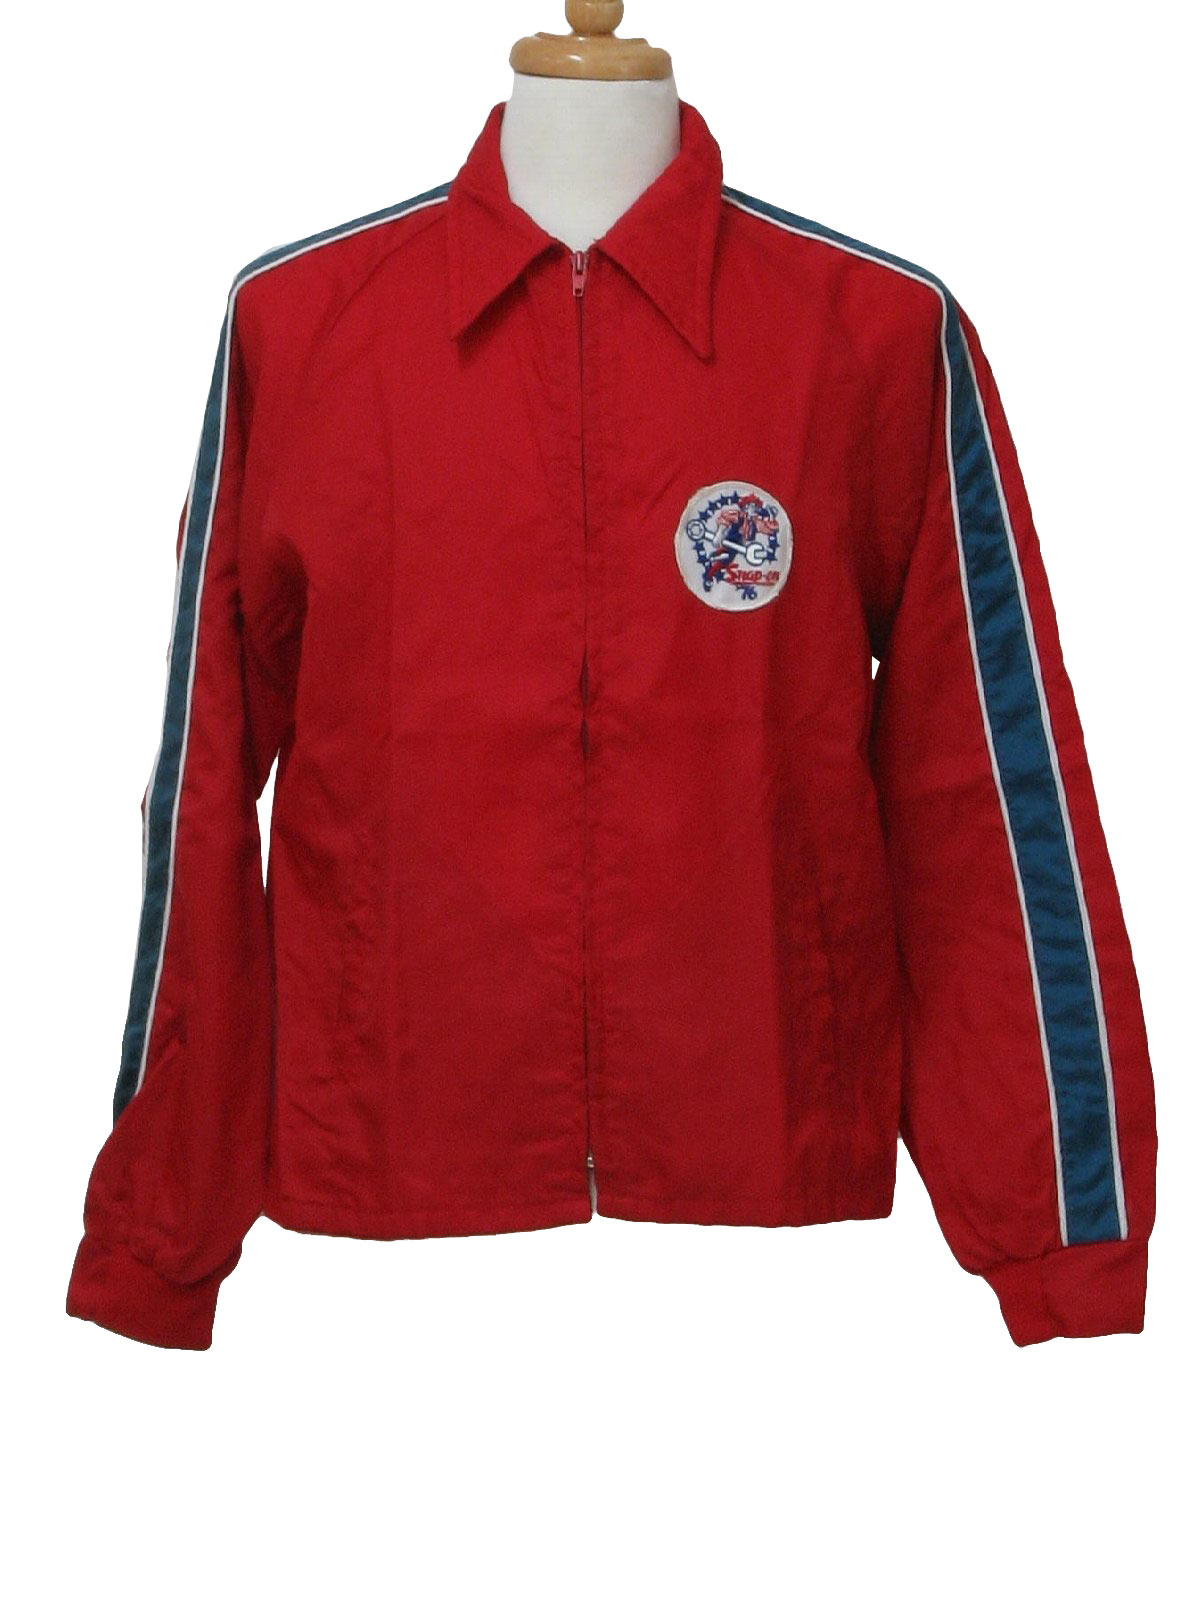 Retro 1970's Jacket (Missing Label) : 70s -Missing Label- Mens red ...